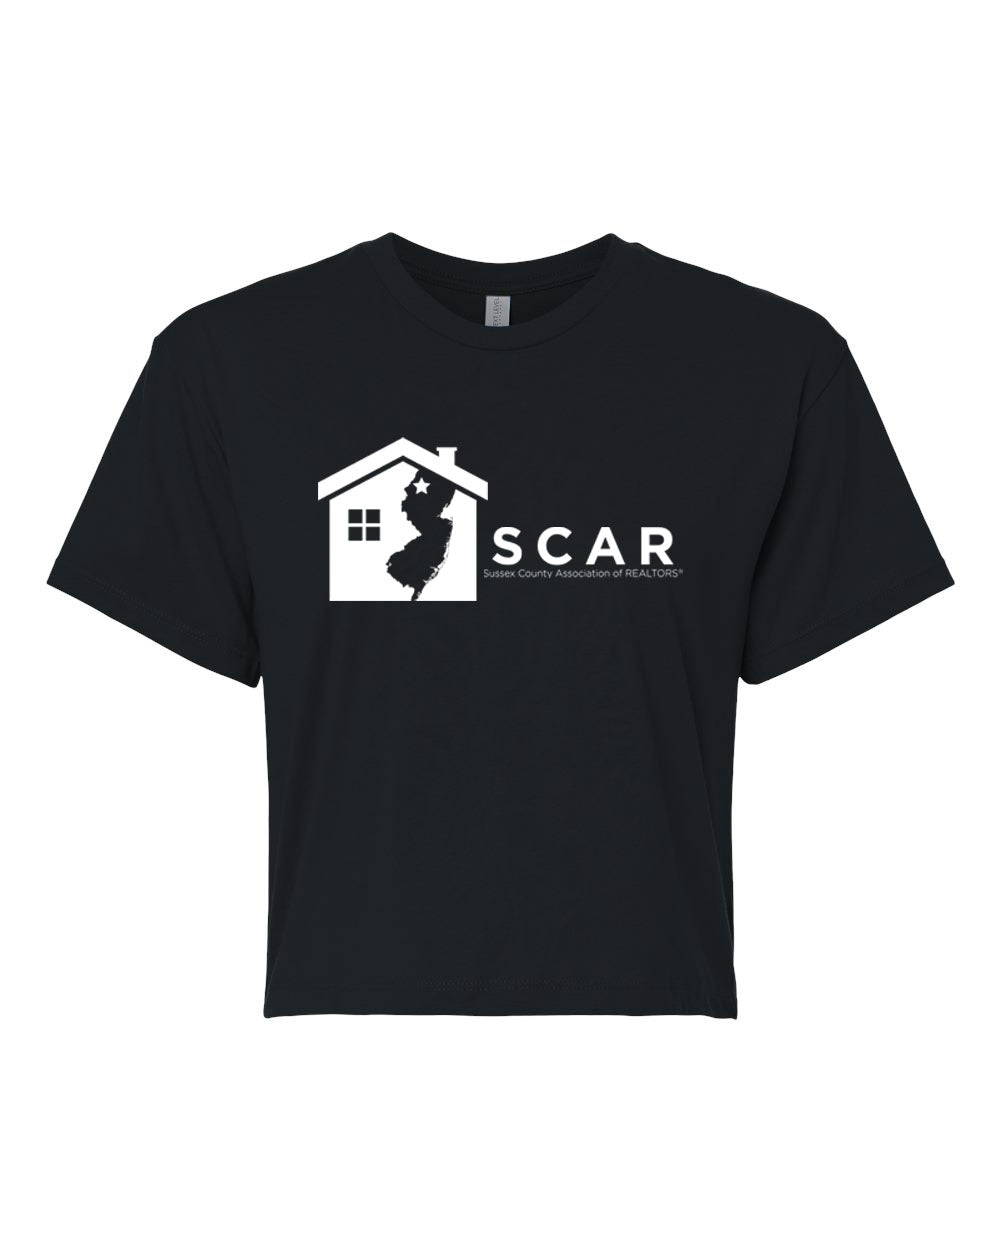 SCAR Crop Top Design 2